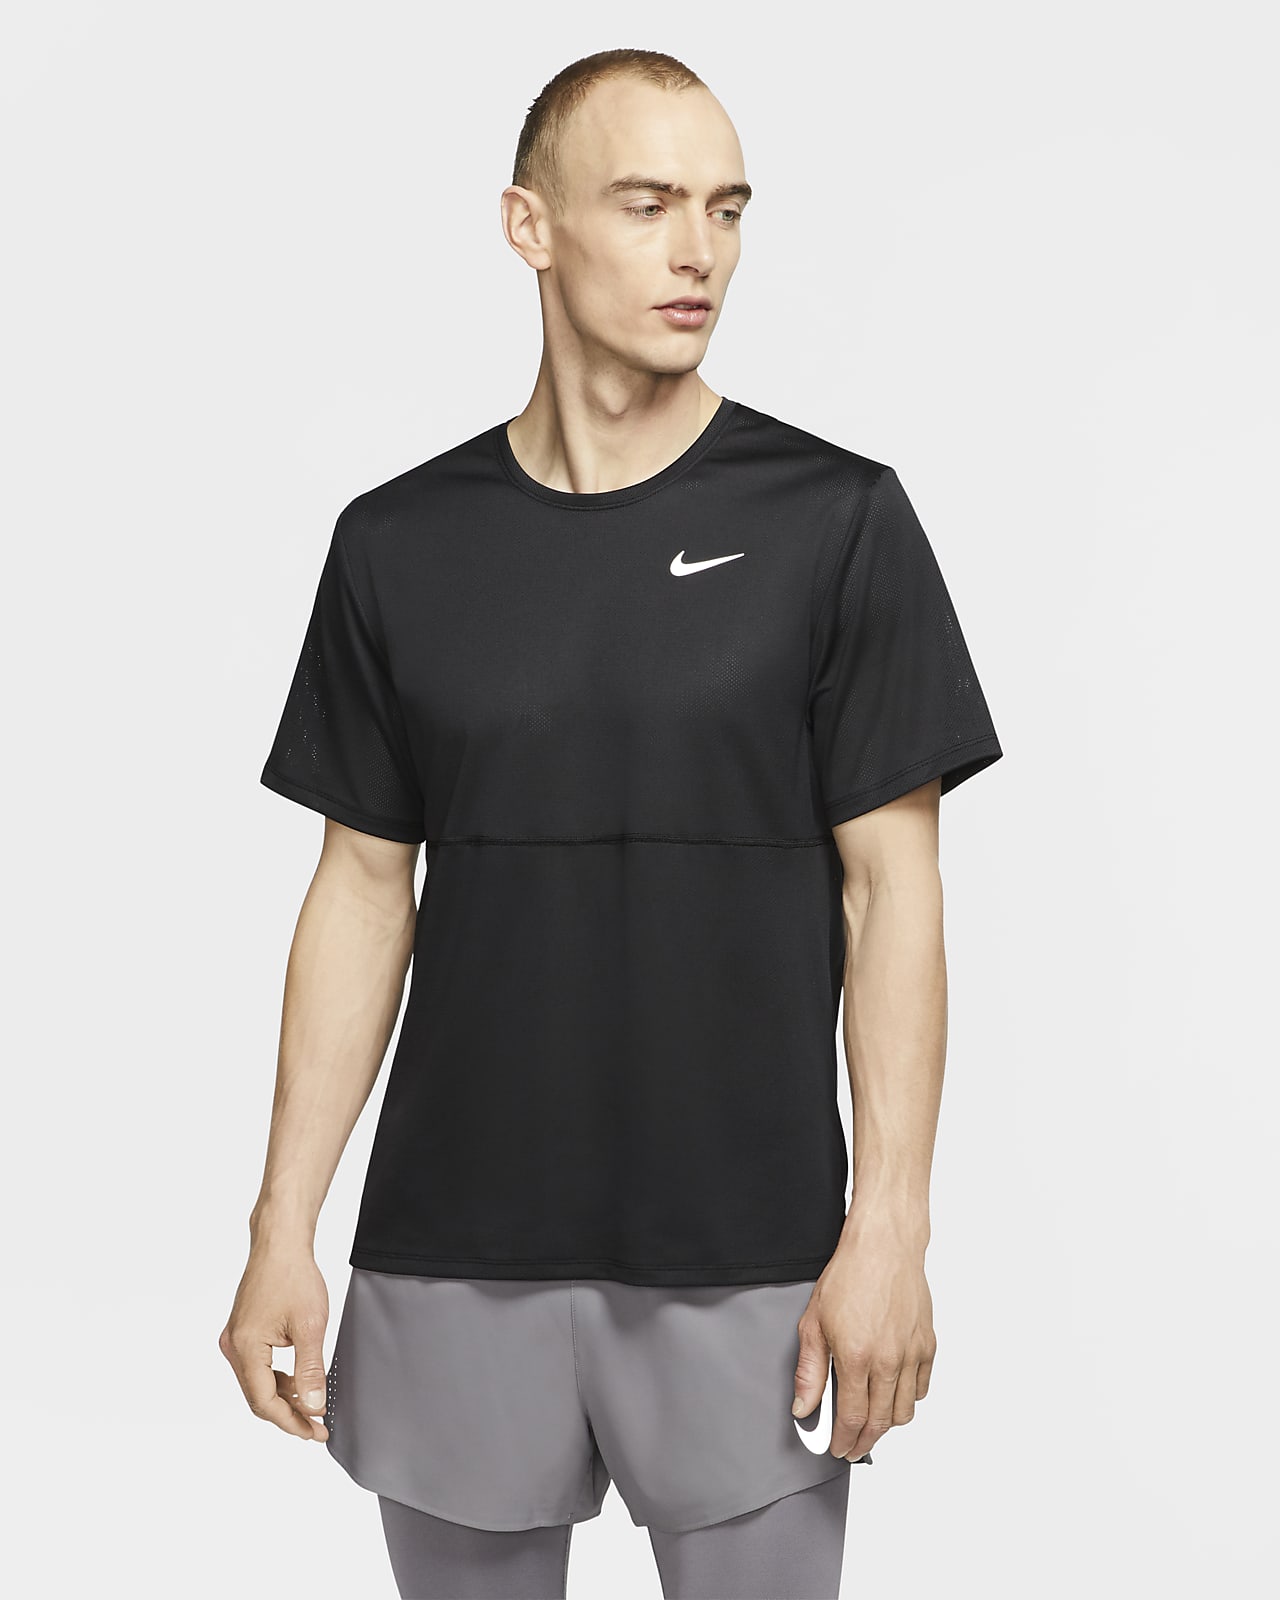 verkoopplan rem Peregrination Nike Breathe Camiseta de running - Hombre. Nike ES